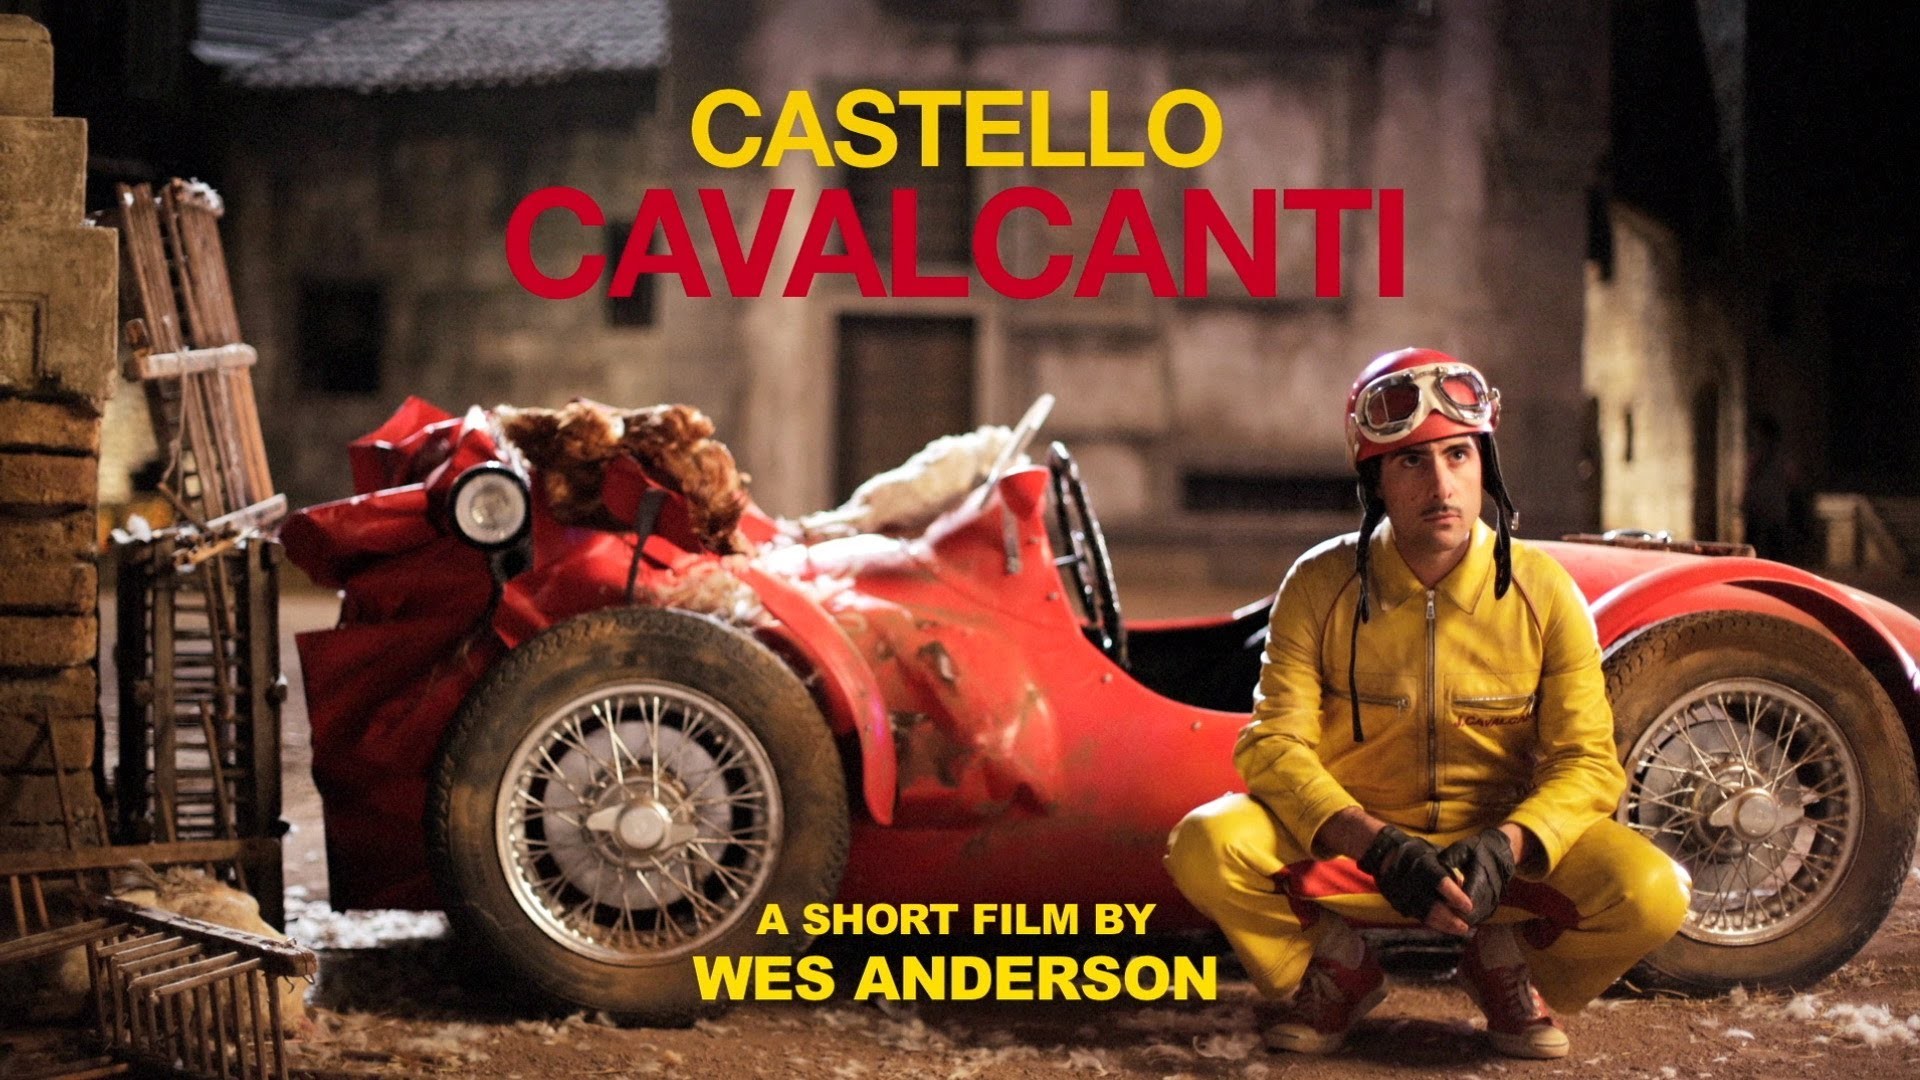 1920x1080 PRADA presents "CASTELLO CAVALCANTI" by Wes Anderson - Trailer - YouTube